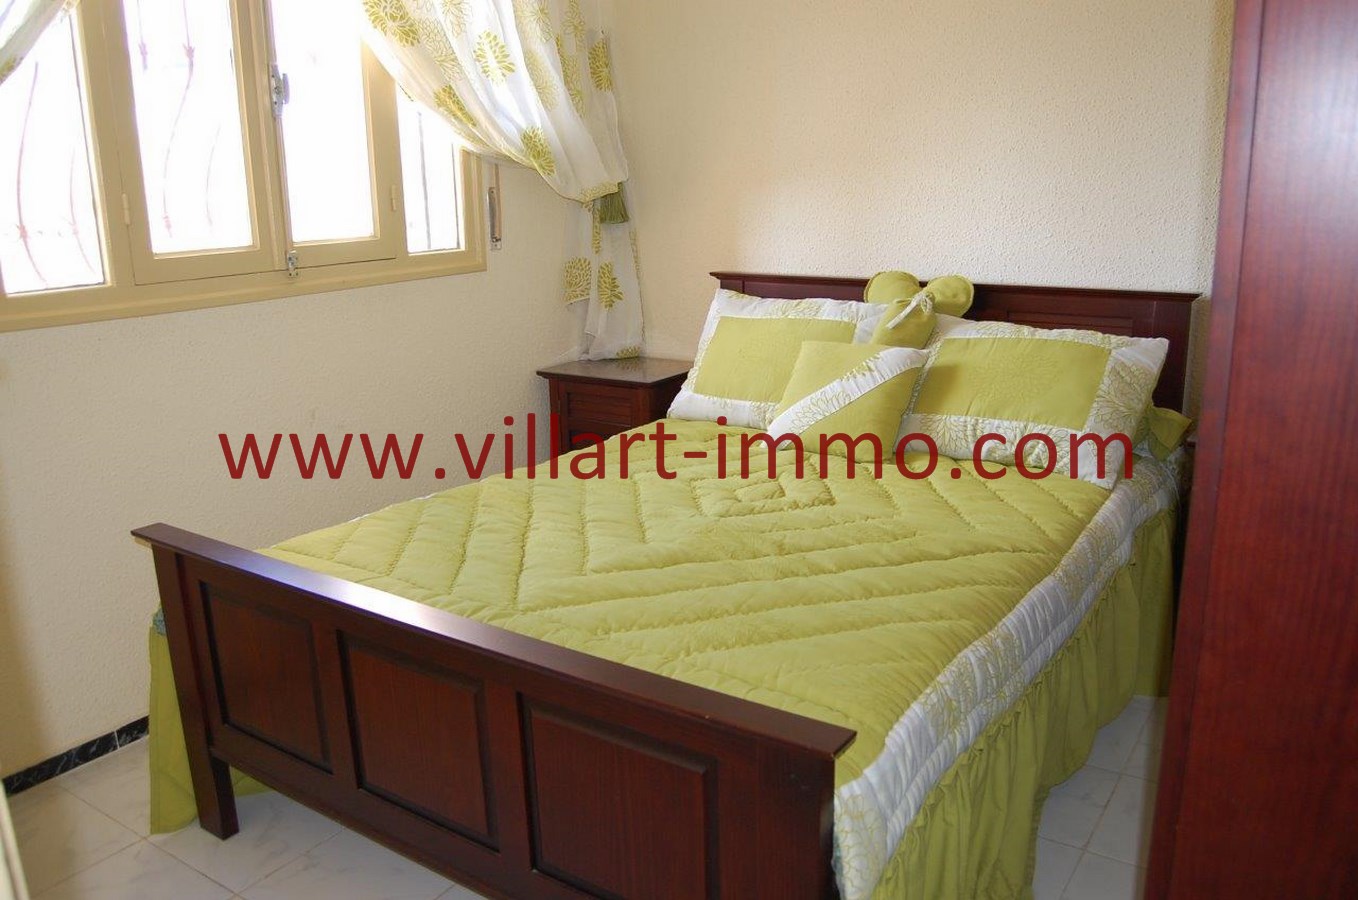 6-Vente-Appartement-Tanger-Chambre 1-VA530-Villart Immo